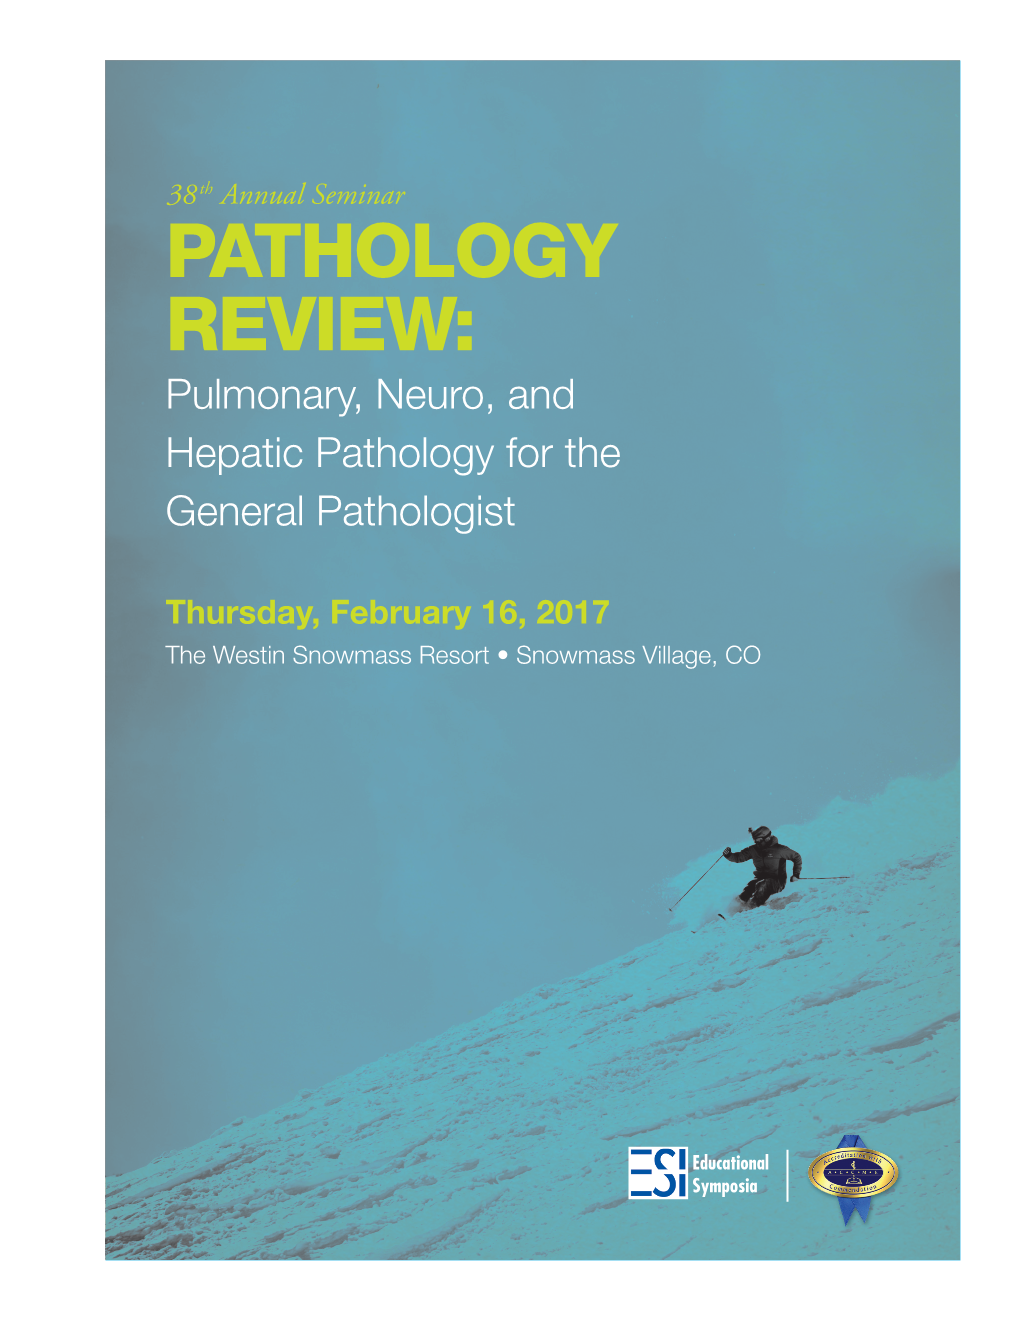 PATHOLOGY REVIEW: Pulmonary, Neuro, and Hepatic Pathology for the General Pathologist